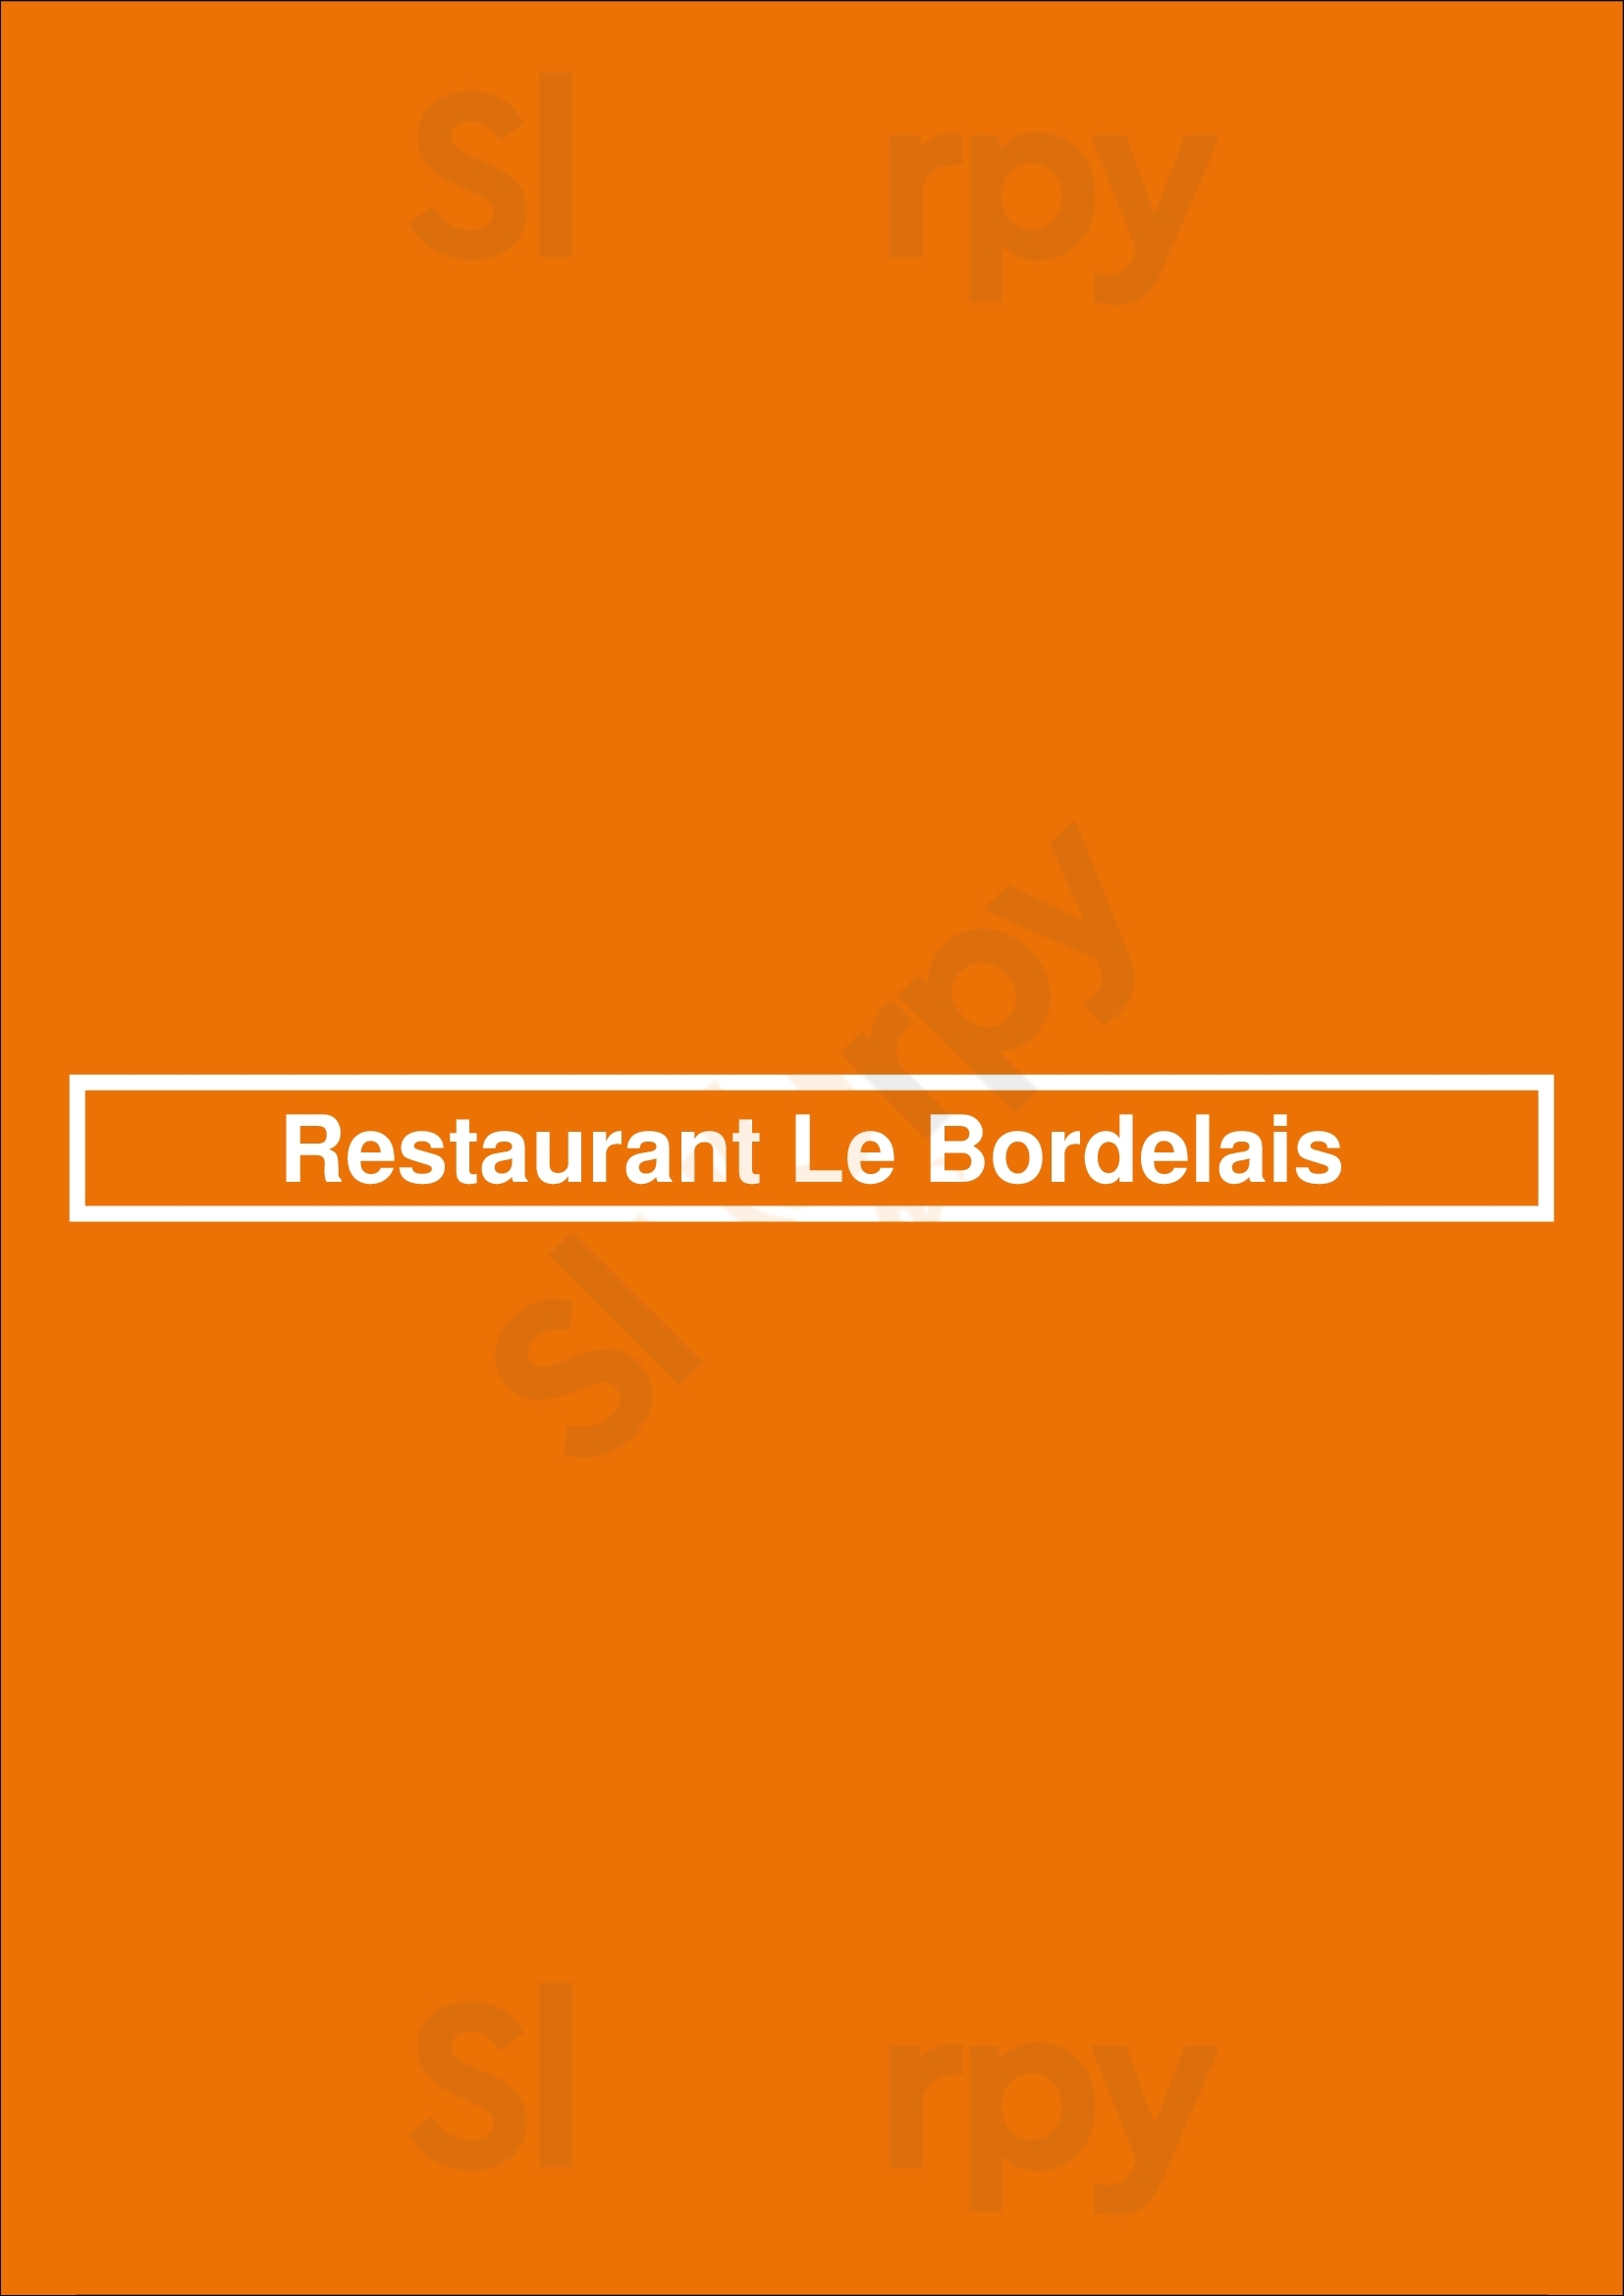 Restaurant Le Bordelais Montreal Menu - 1